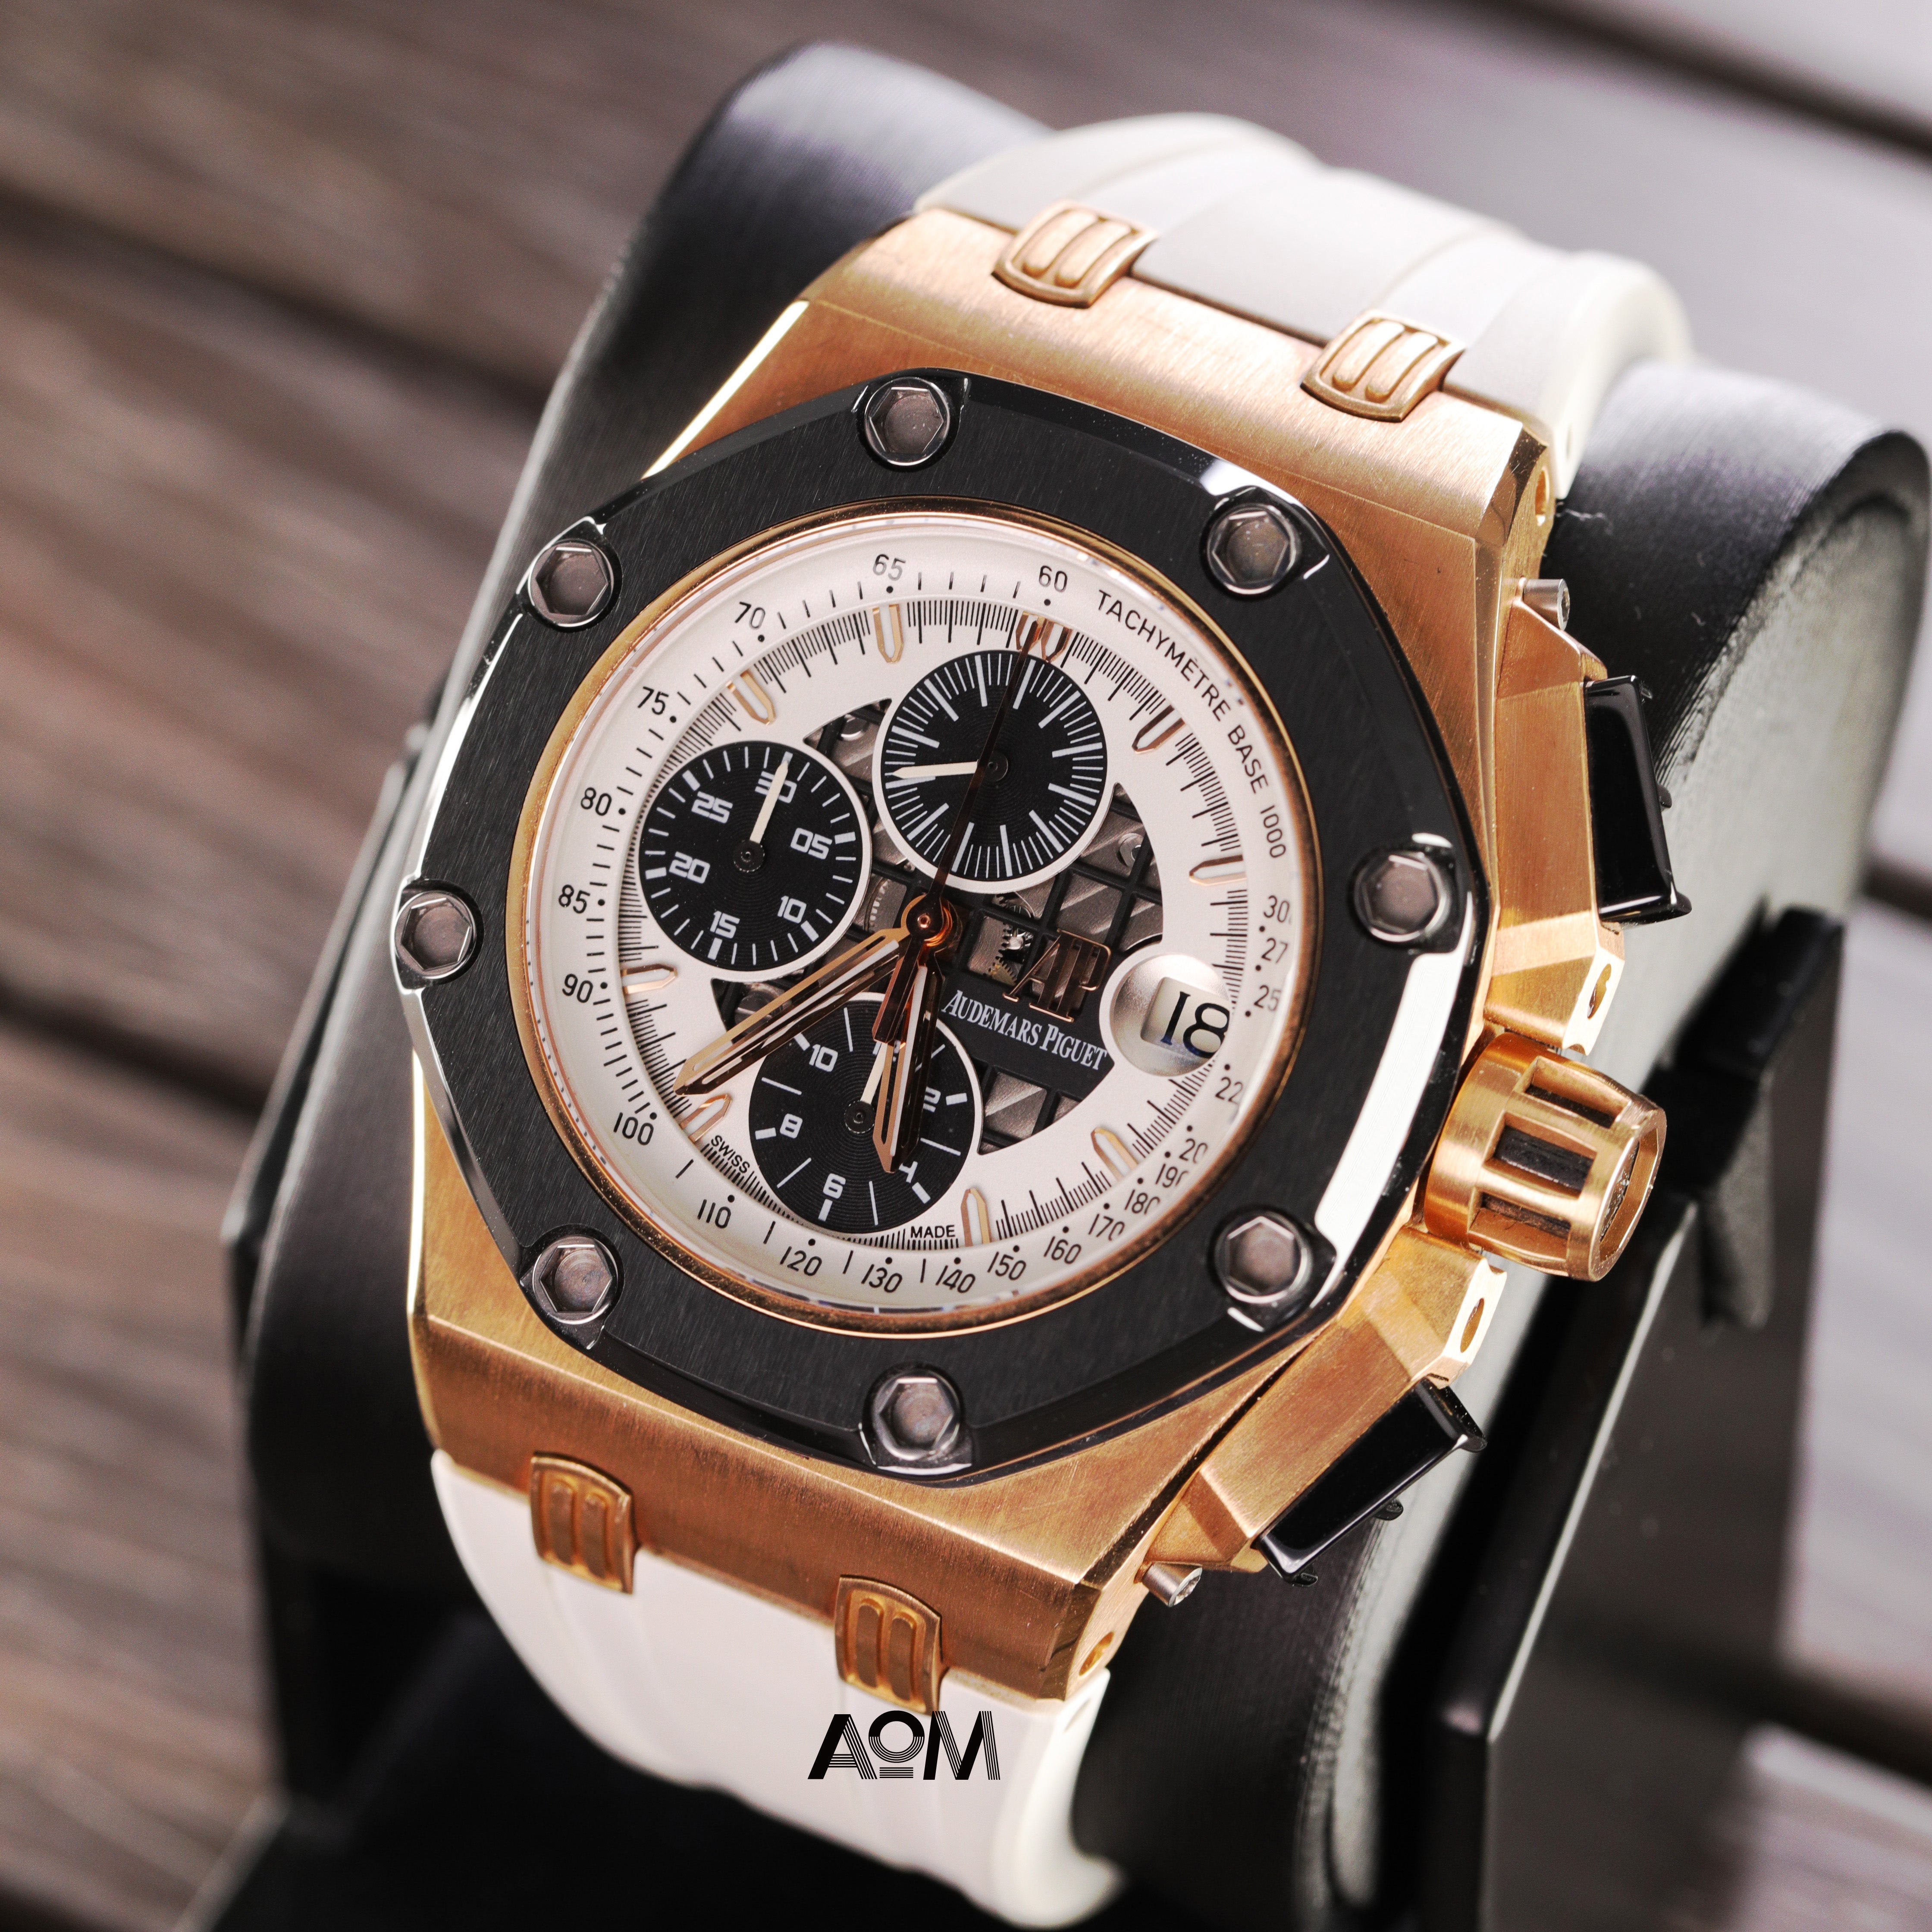 26078RO.OO.D002CR.01 - AOM Luxury Watch